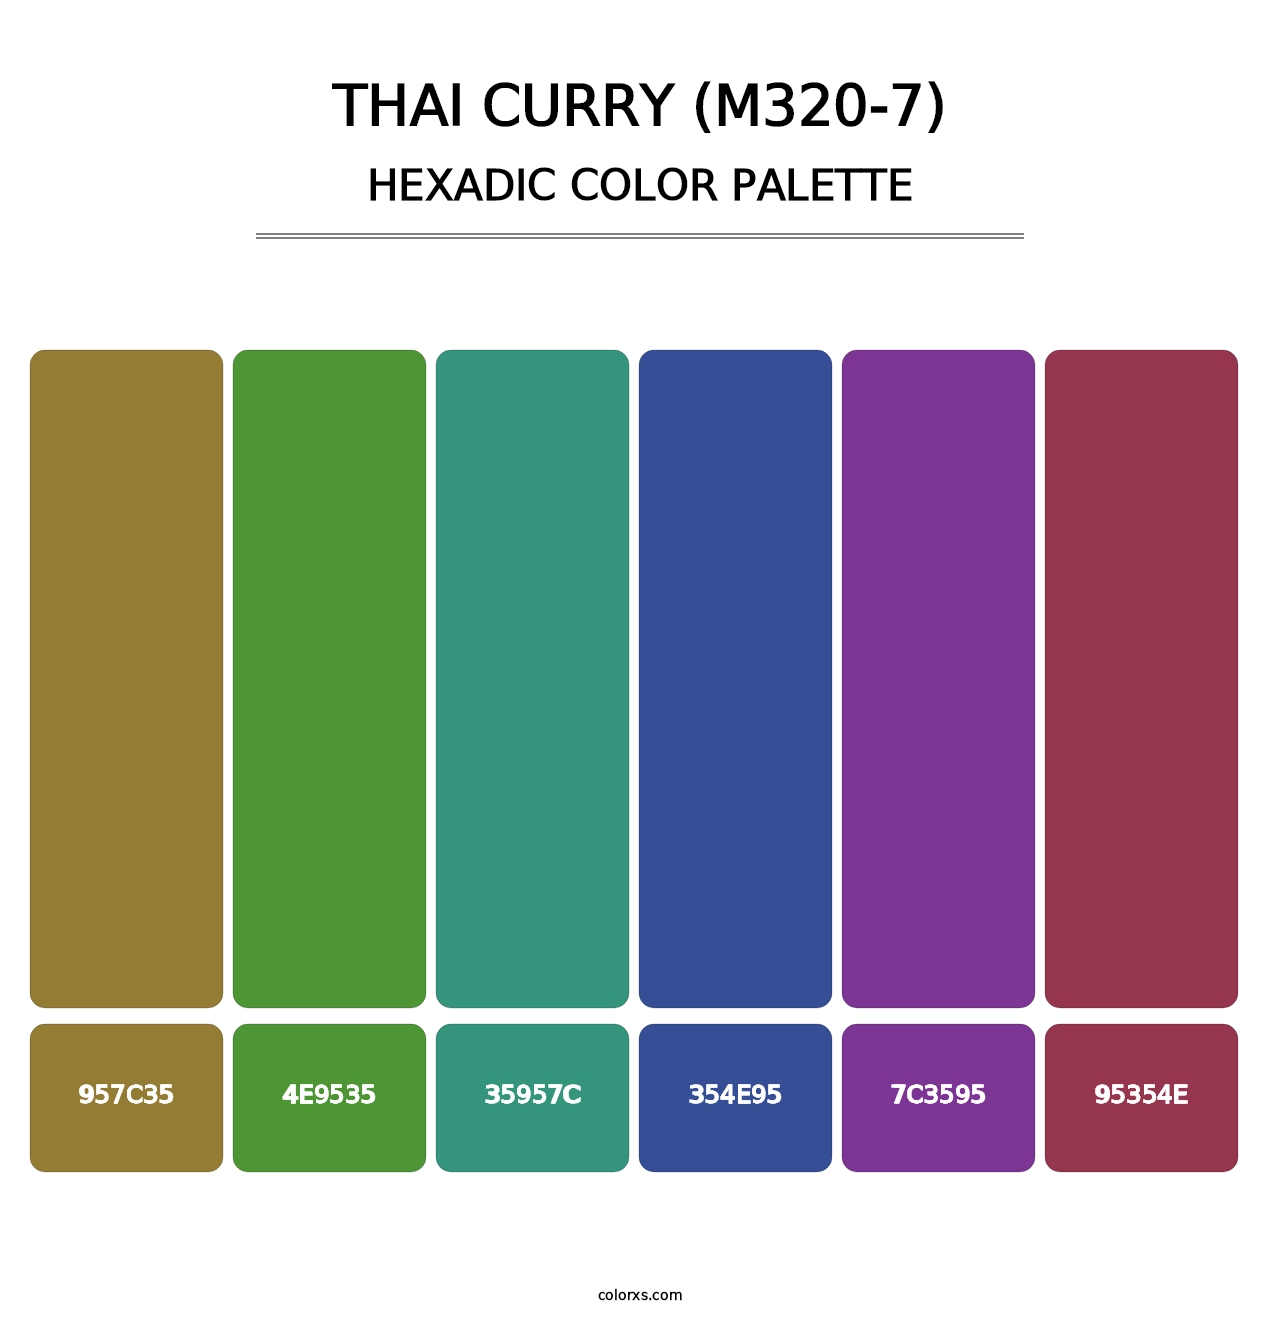 Thai Curry (M320-7) - Hexadic Color Palette